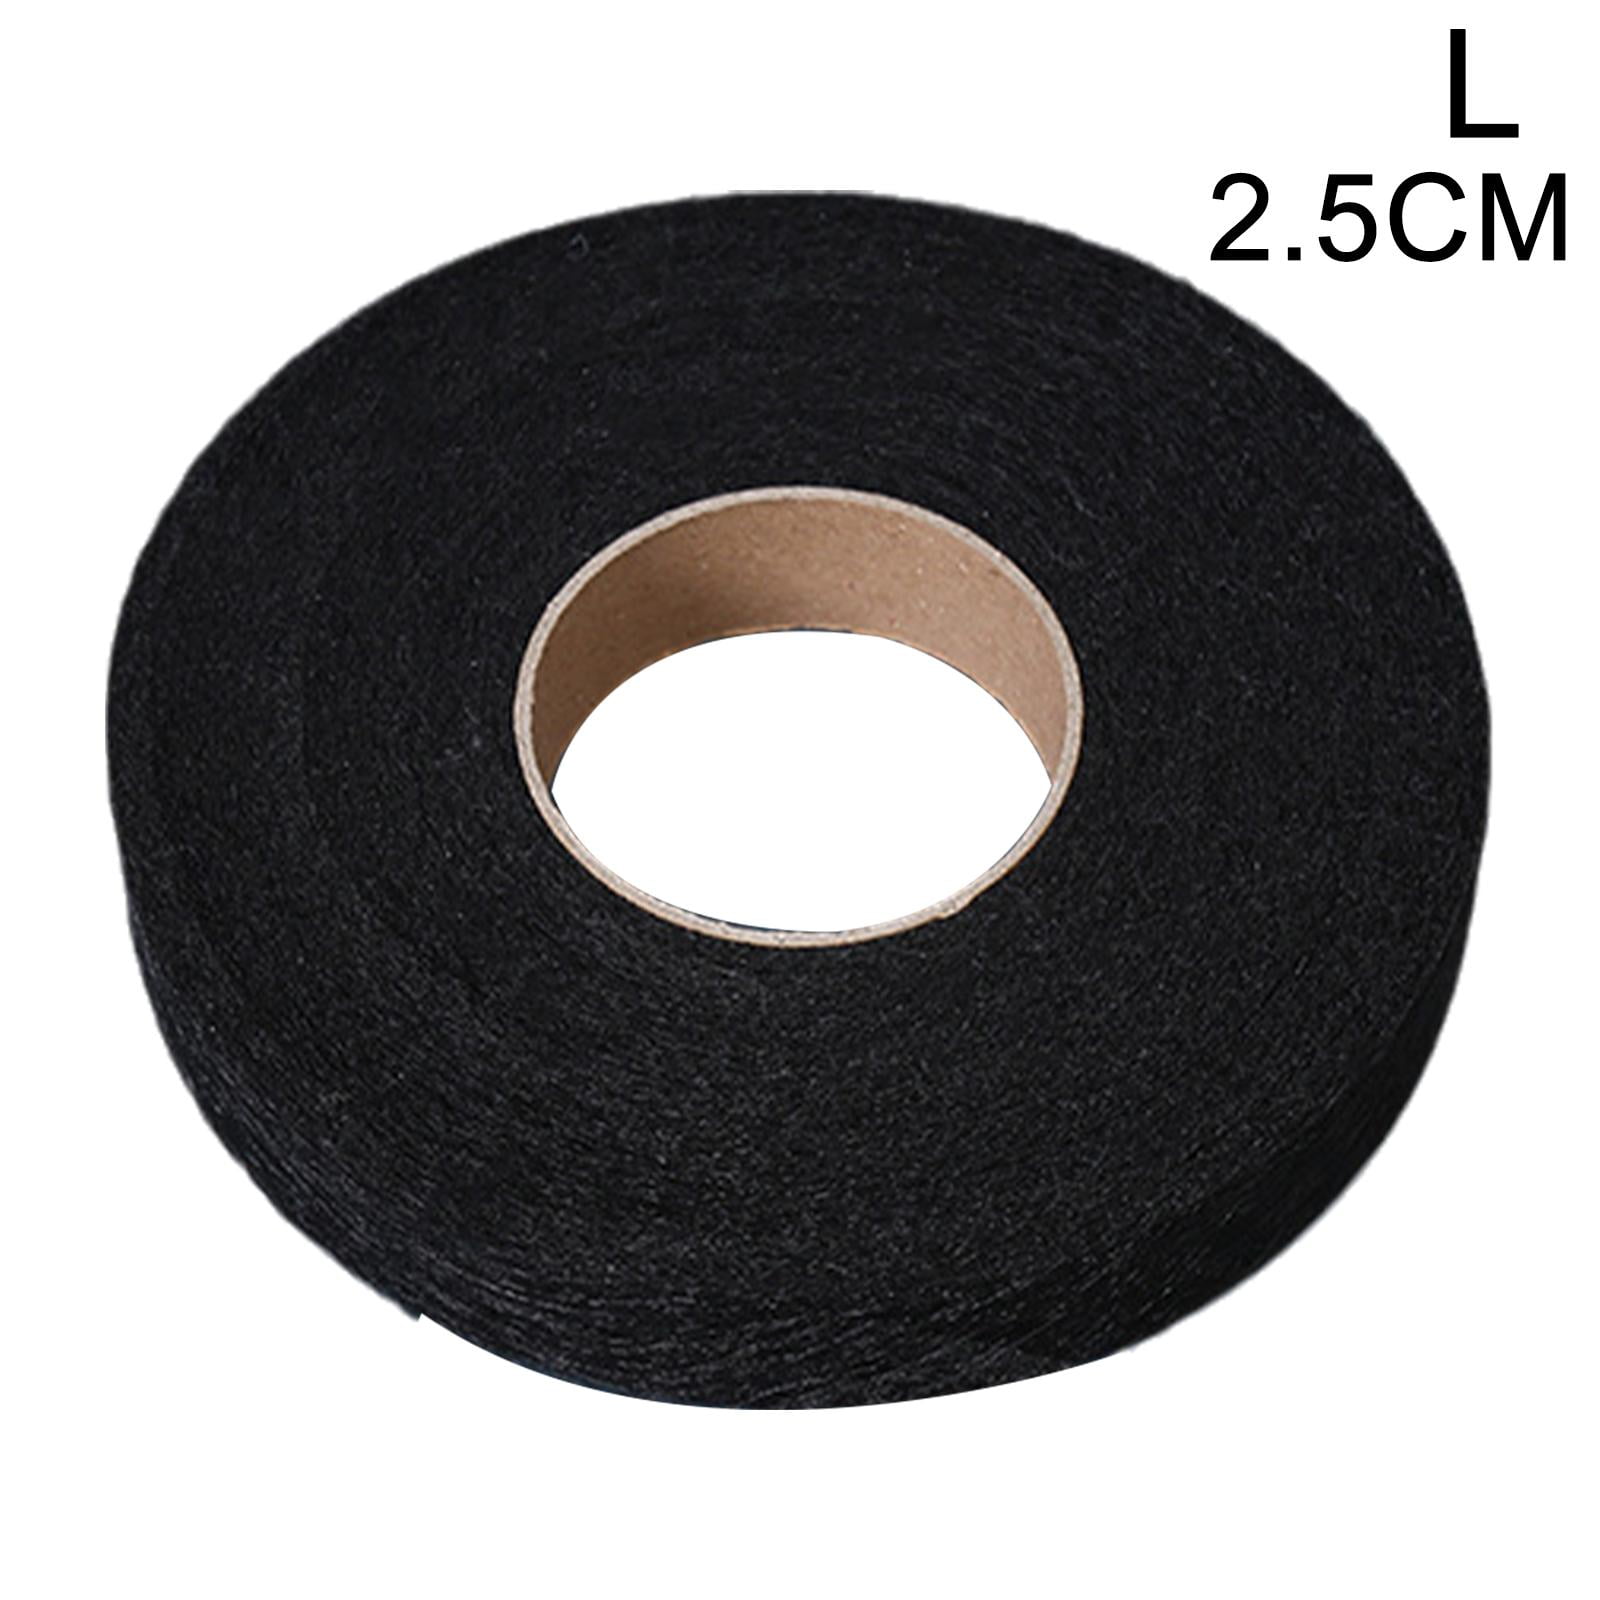 PLGEBR Fabric Fusing Tape,Iron-On Hemming Tape,No Sew 70 Yards Fabric  Fusing Hemming Pants Tape Jeans for Bonding Clothes G8D6 